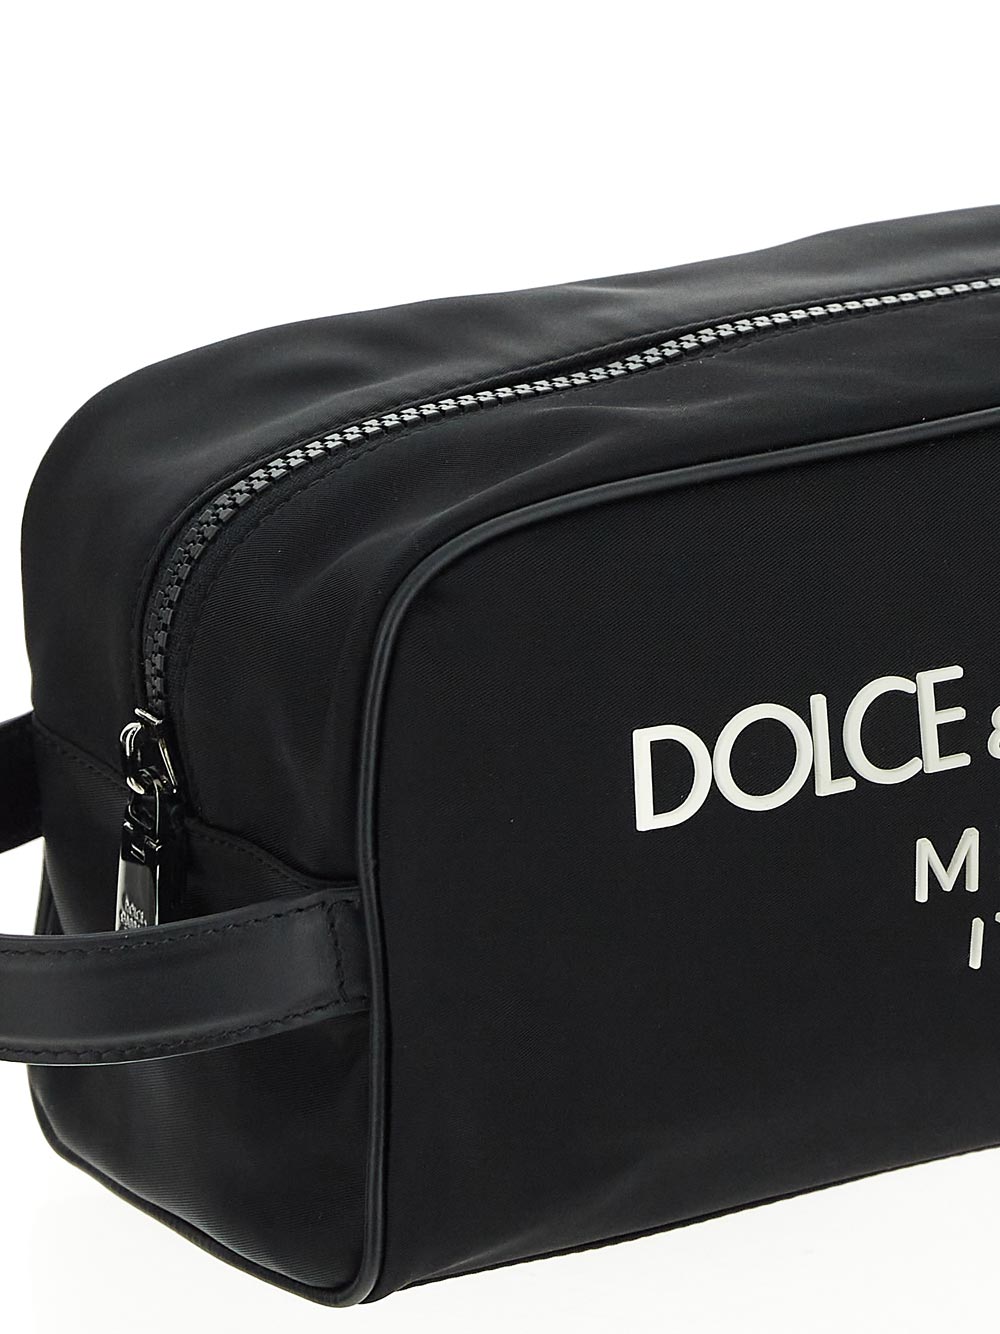 Dolce & Gabbana Nylon Toiletry Bag With Rubberized Logo